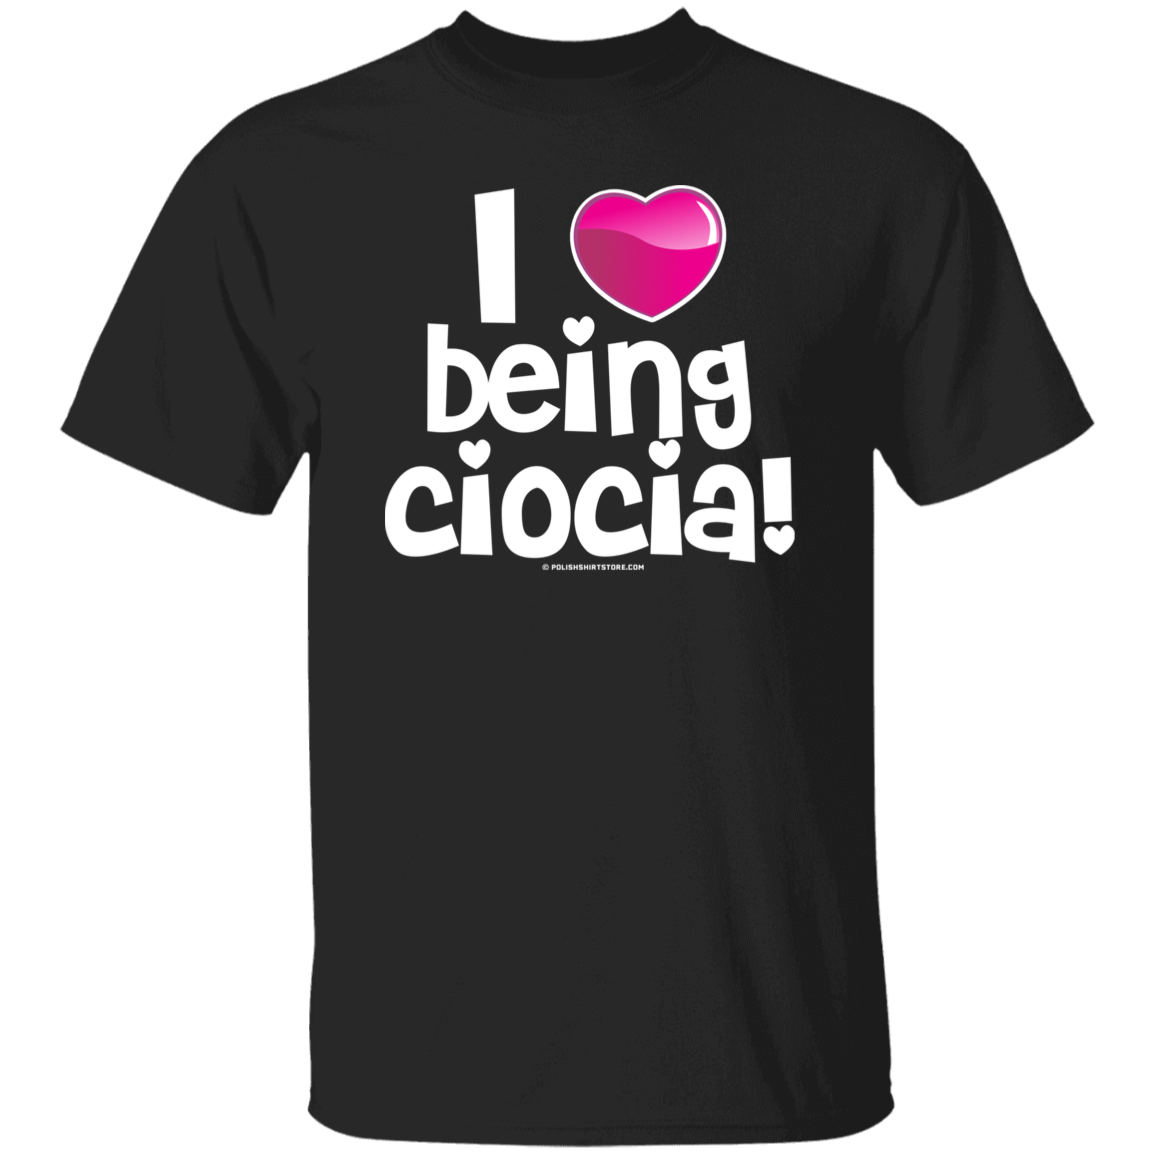 I Love Being Ciocia Apparel CustomCat G500 5.3 oz. T-Shirt Black S